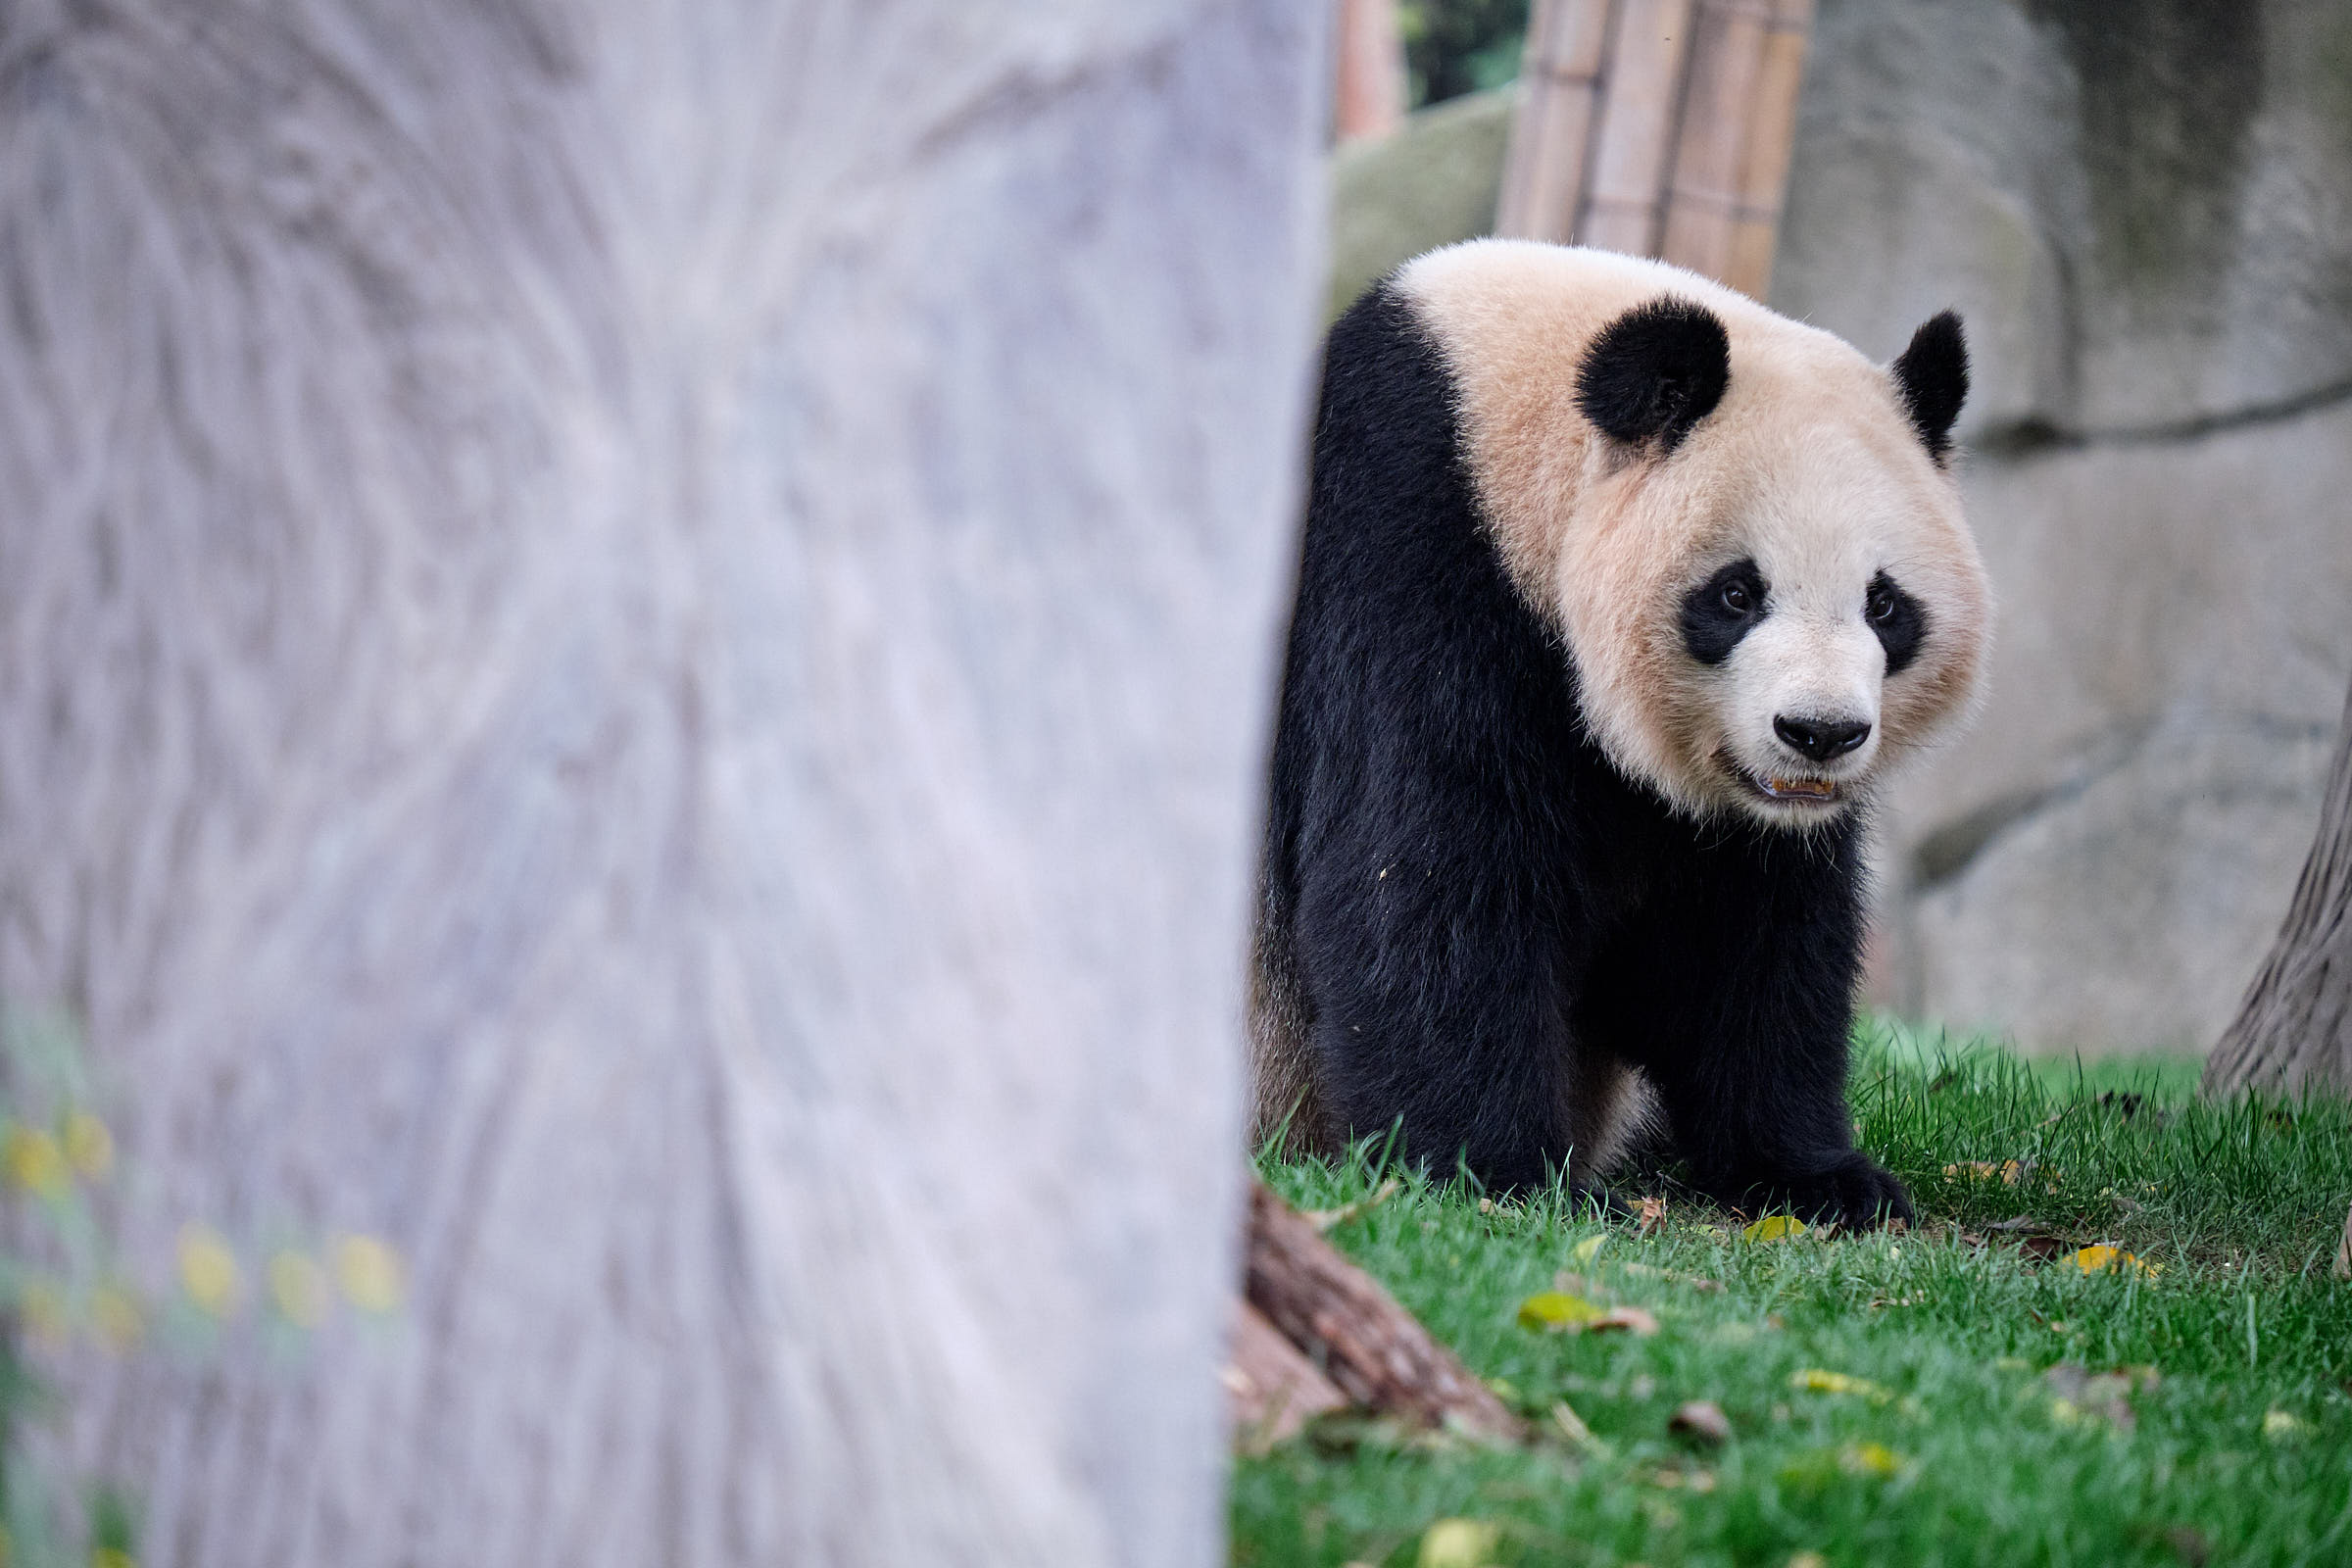 Panda at Chengdu Panda Reserve